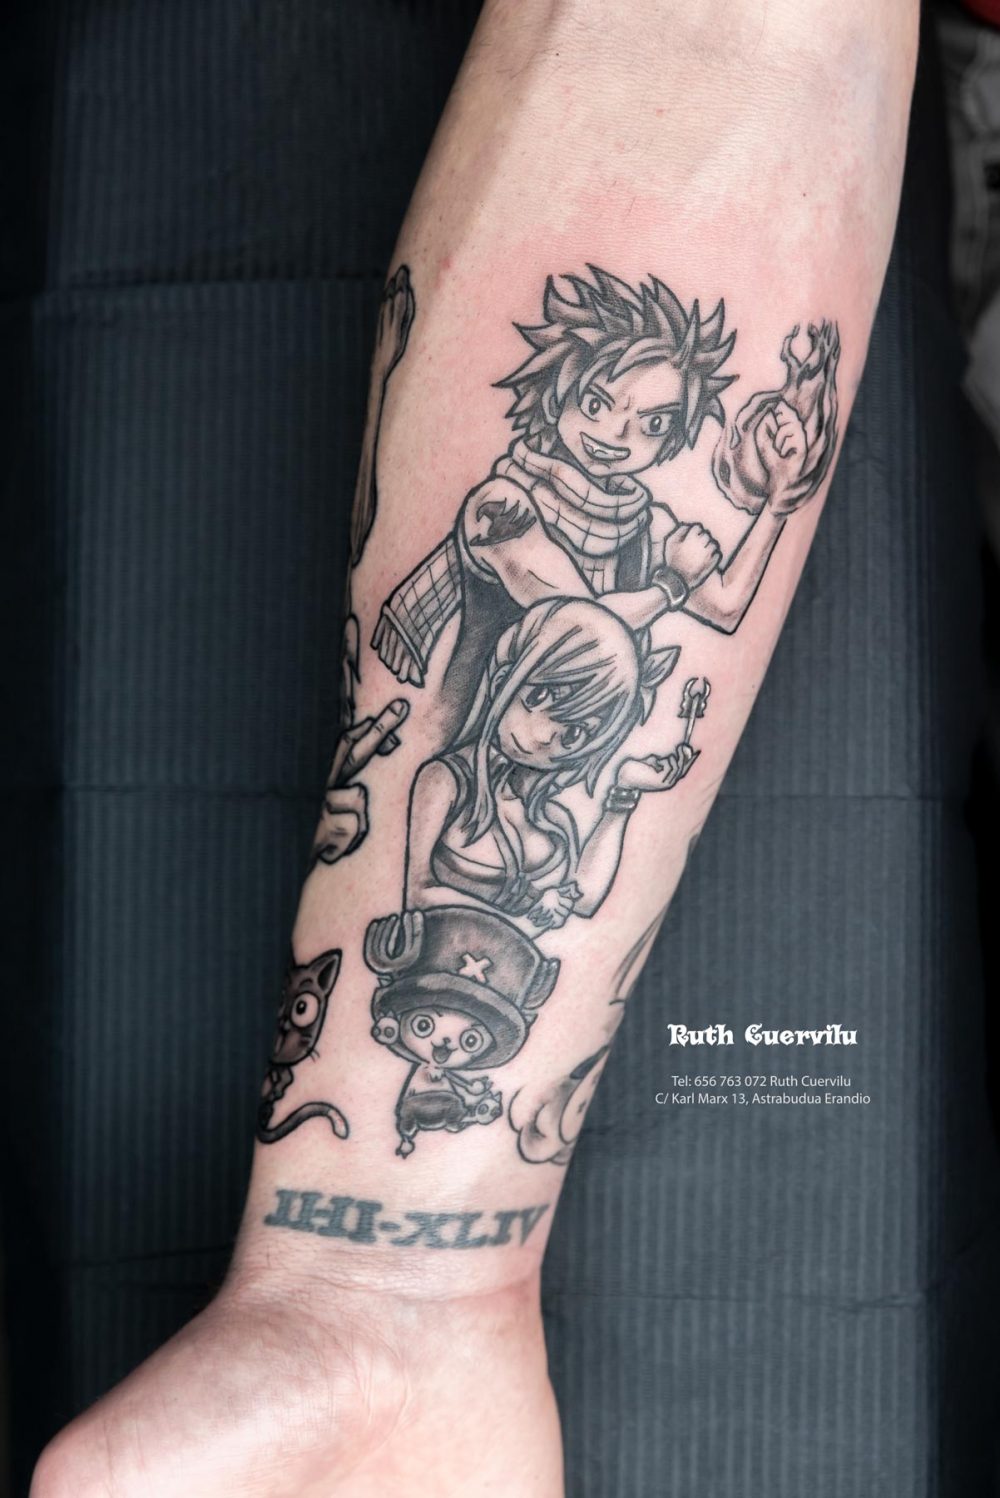 Tatuaje Brazo manga Fairy Tail One Piece Anime - Ruth Cuervilu Tattoo - KM13 Studio - Estudio de tatuajes en Astrabudua Erandio Getxo, Bilbao Bizkaia Basauri barakaldo portugalete